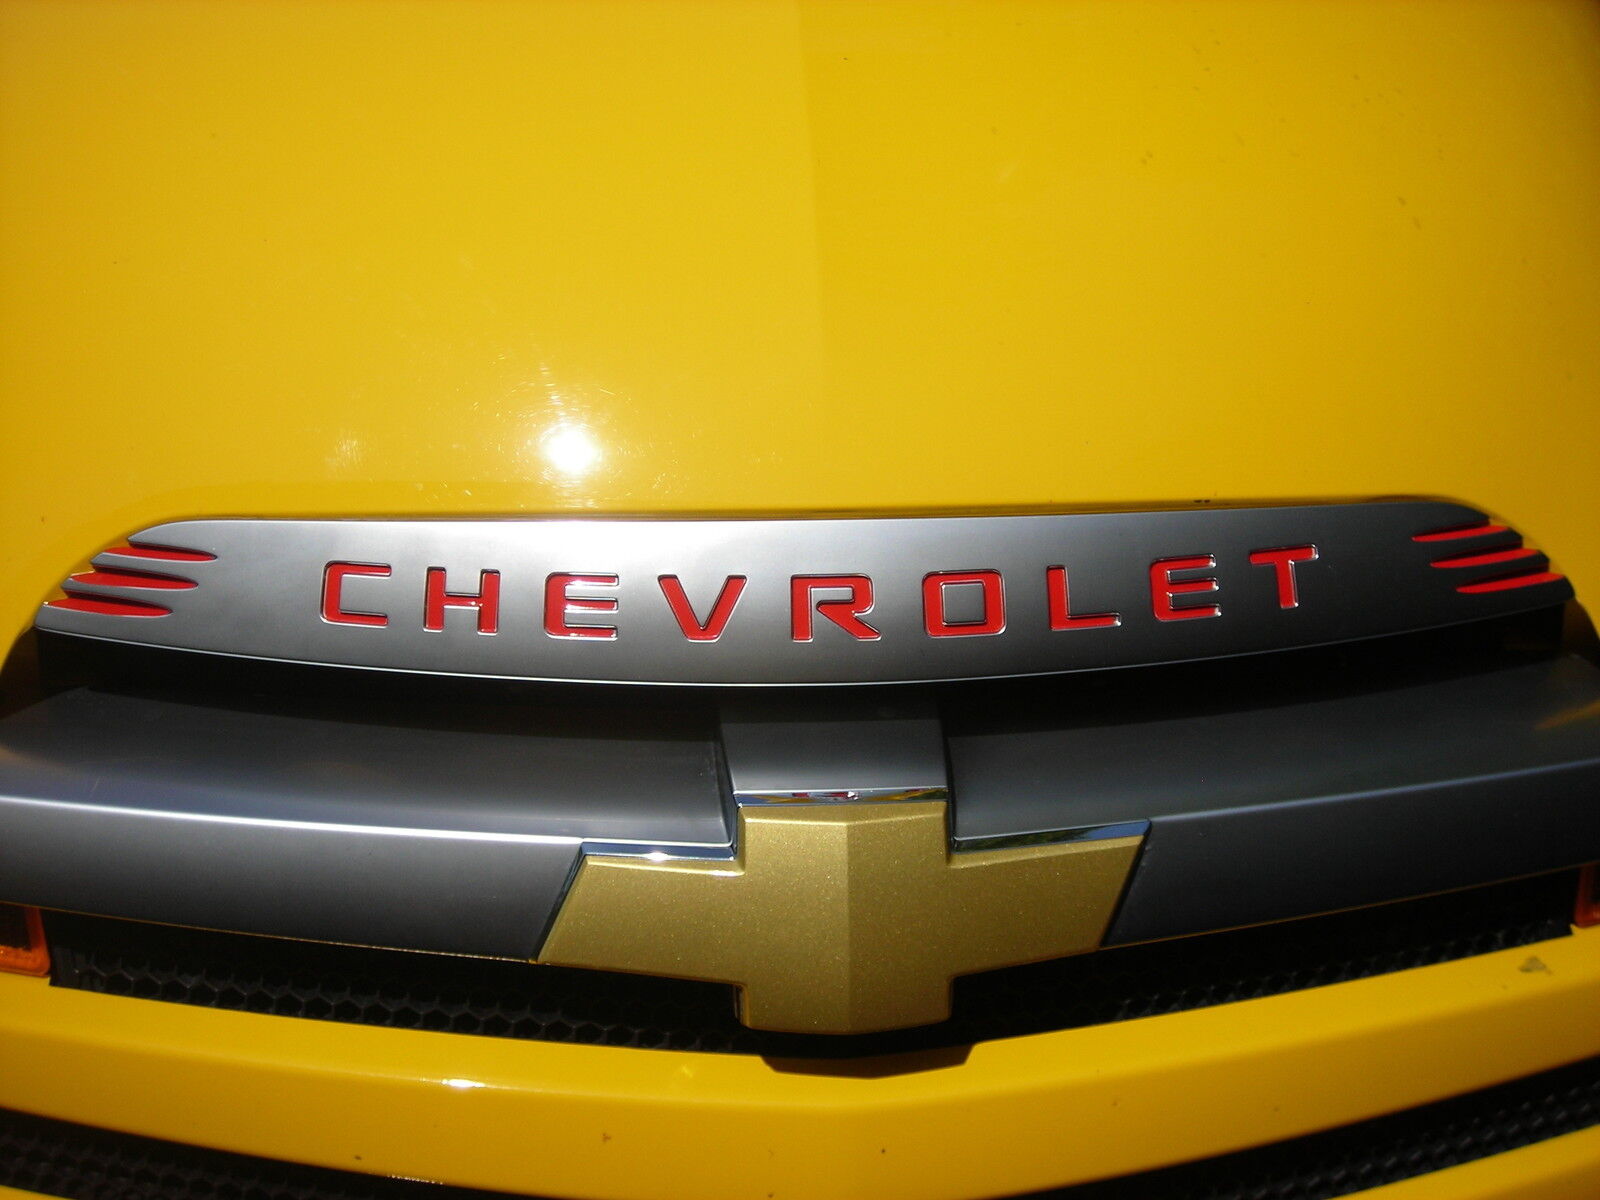 Chevy SSR front grill CHEVROLET & whisker VINYL STICKER inserts fits 03 04 05 06